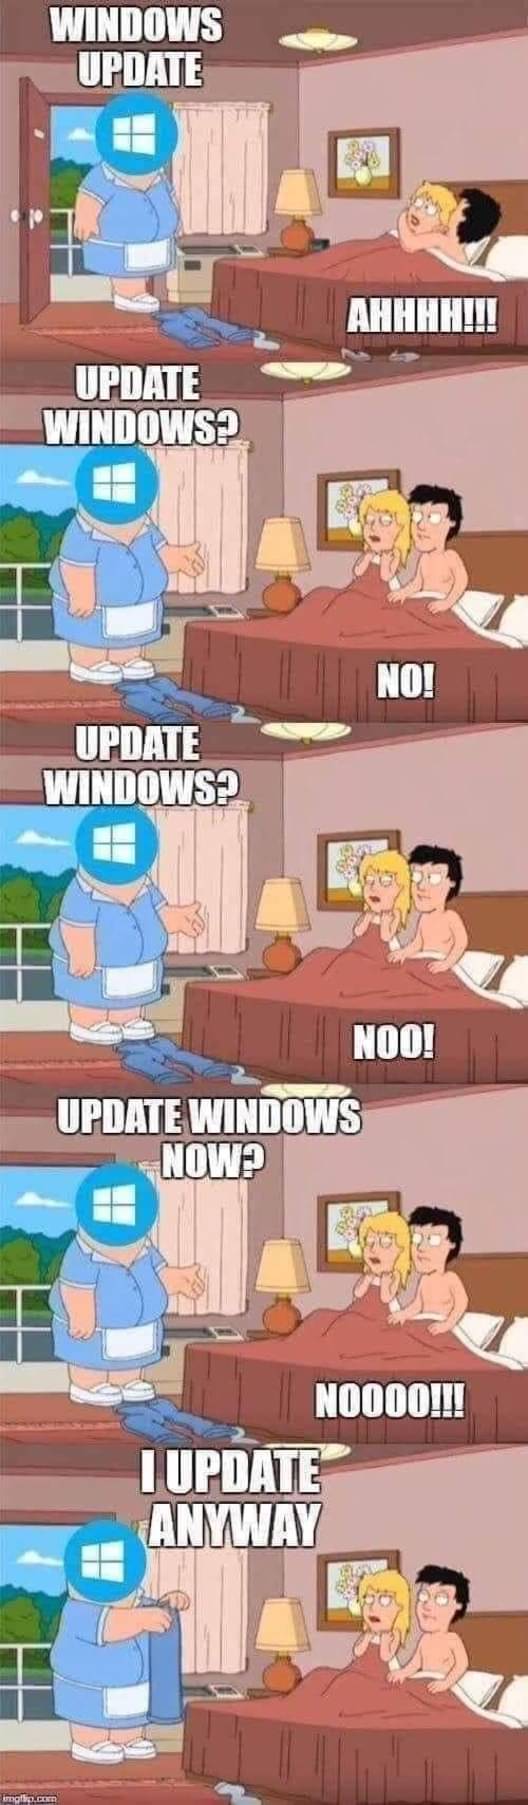 update_windows.jpg